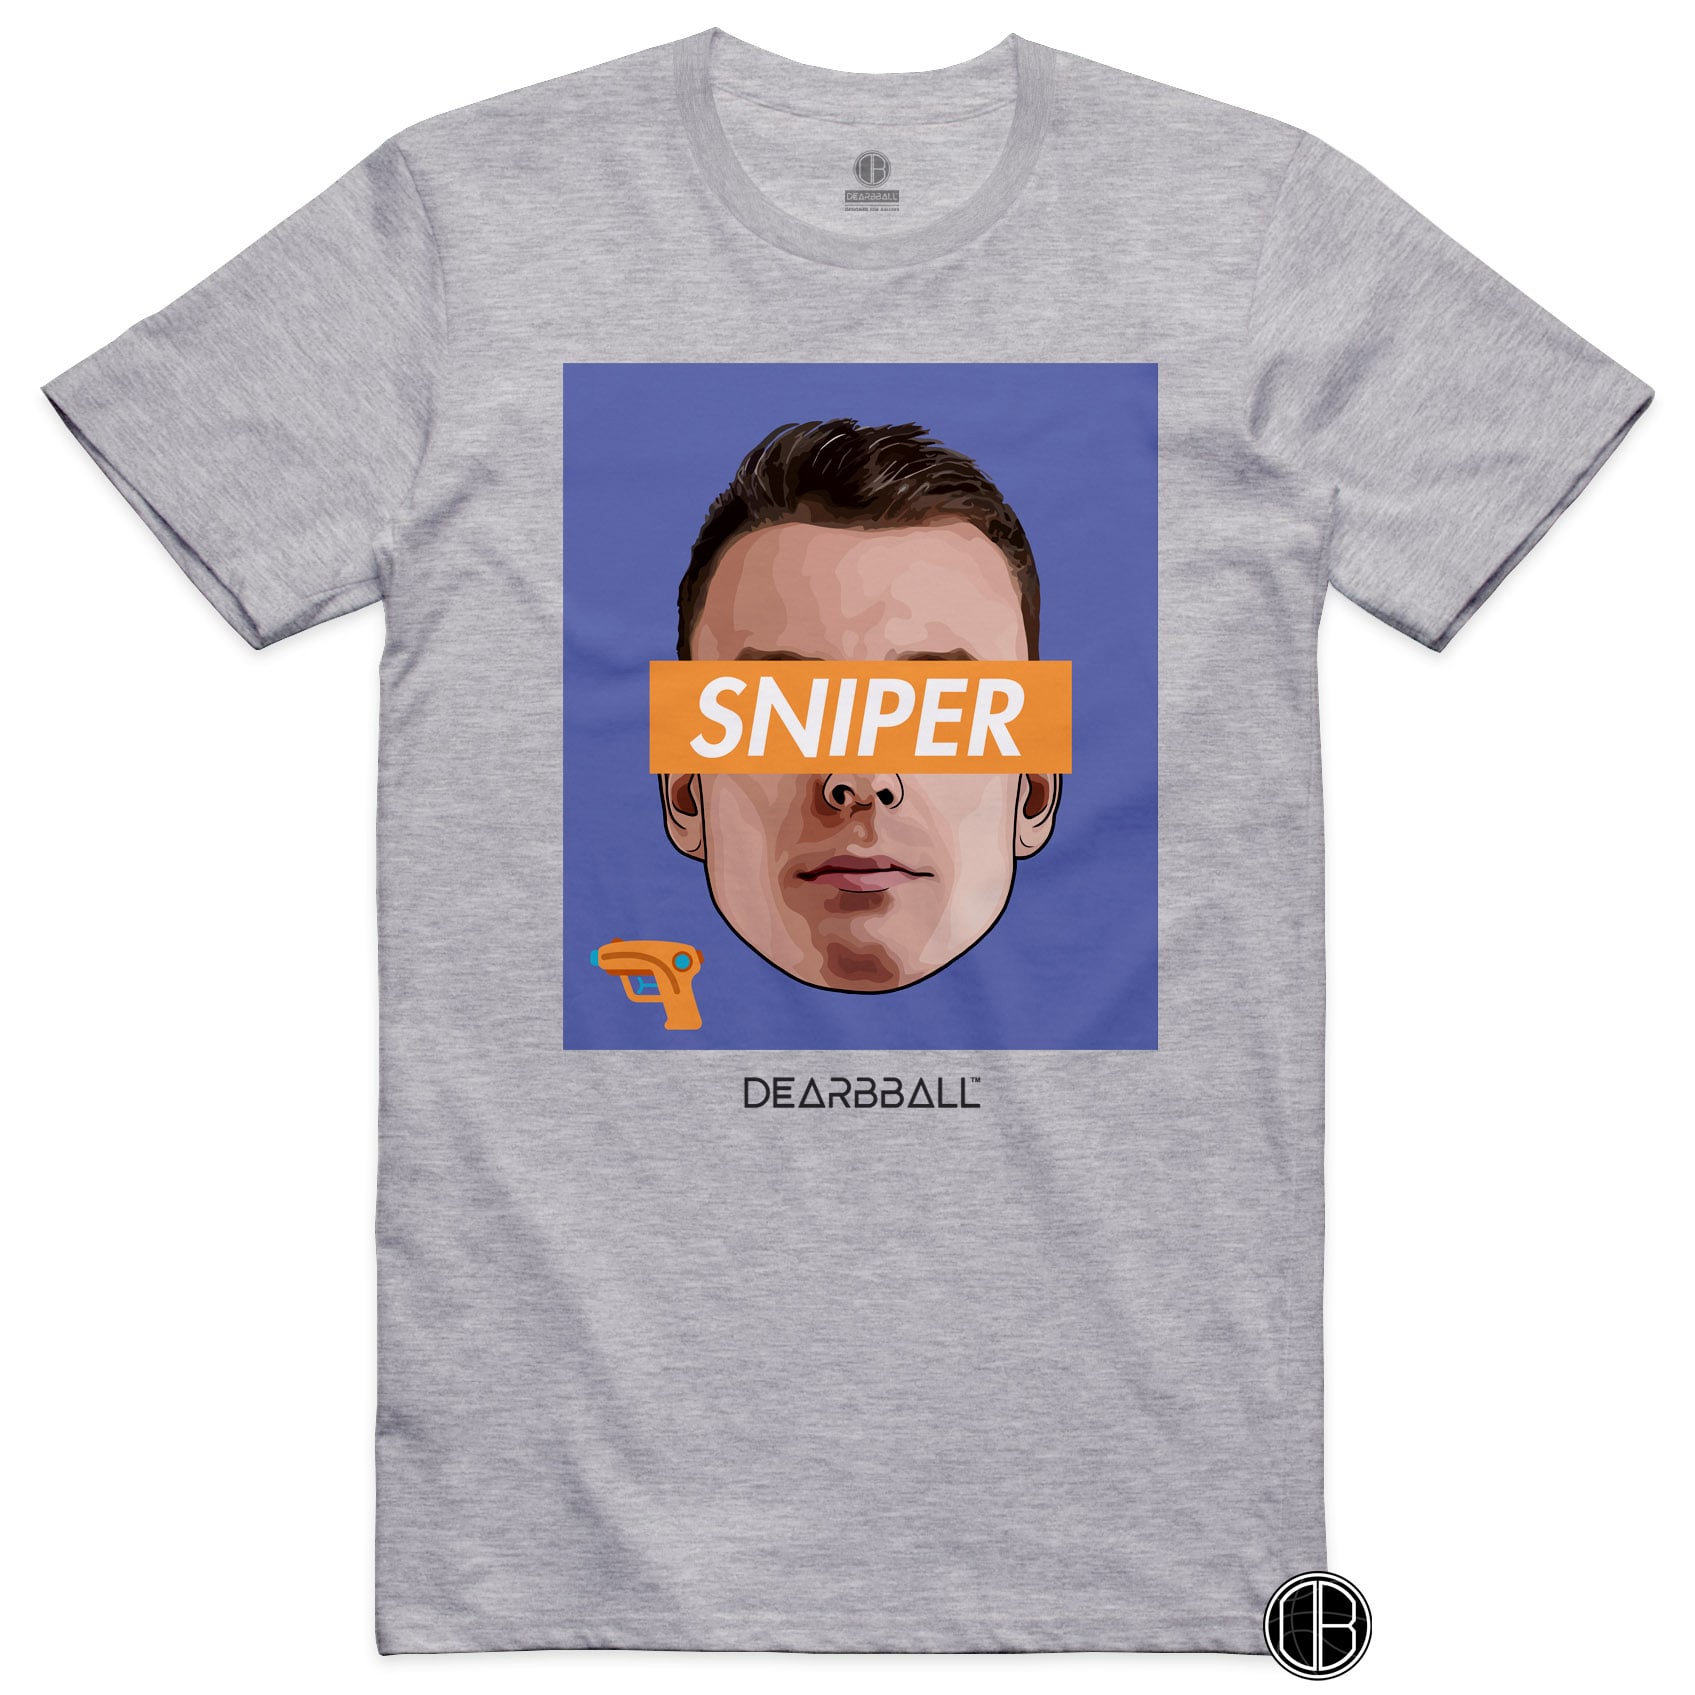 DearBBall T-Shirt - SNIPER Orange Edition